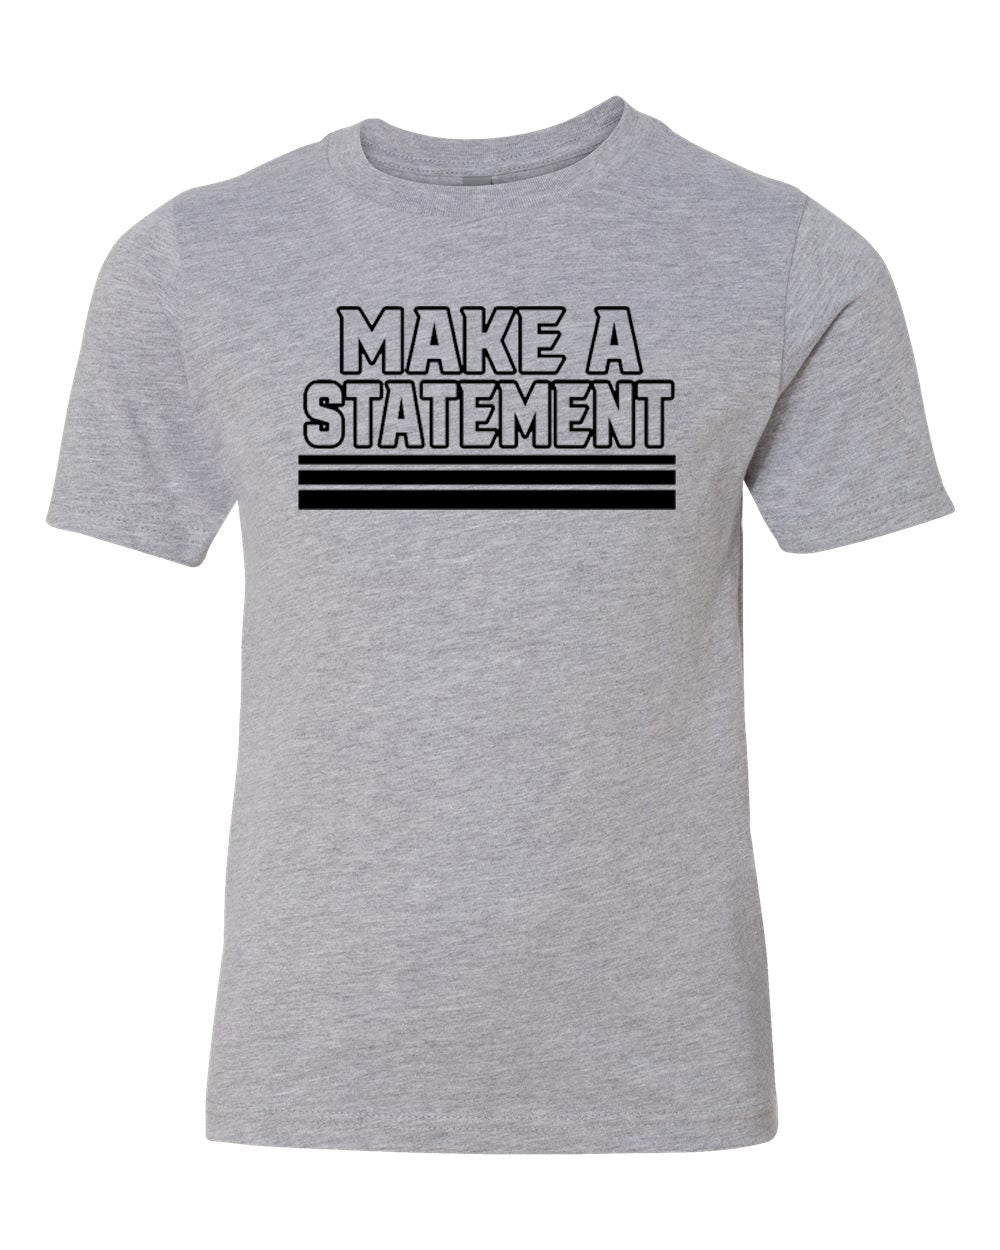 Make A Statement Youth T-Shirt Heather Gray